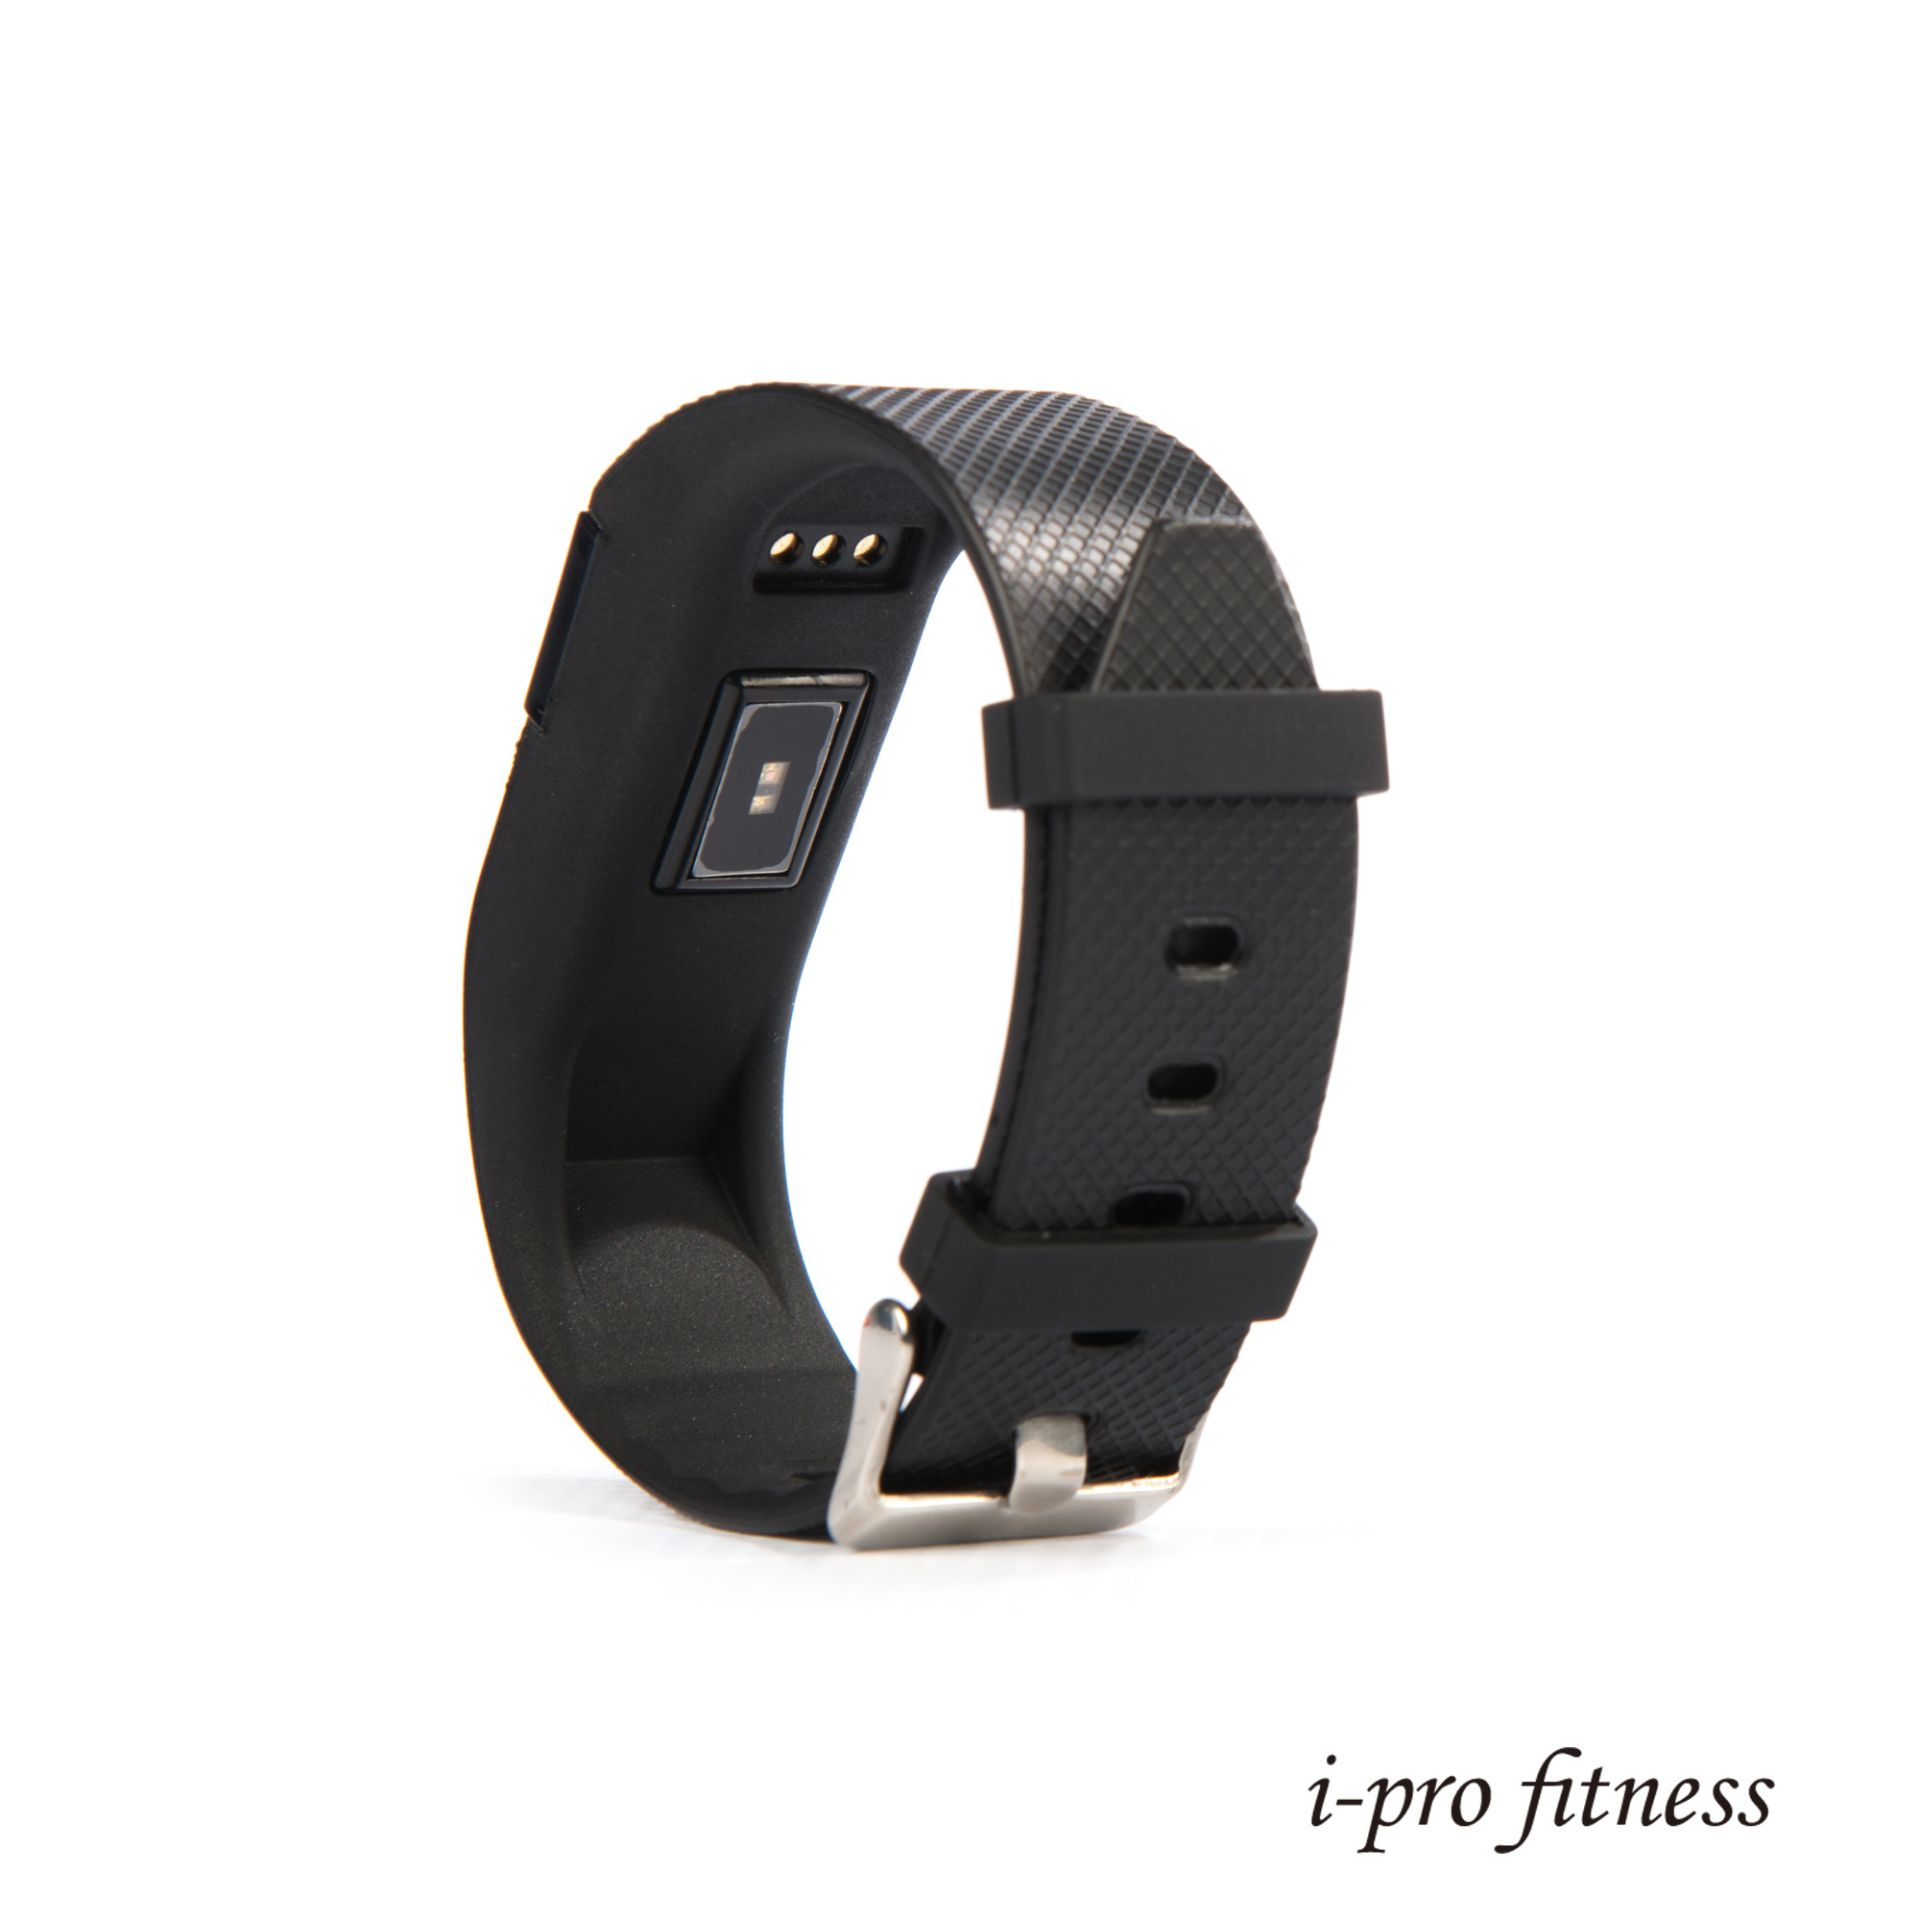 Fitness Tracker i-pro fitness, Bluetooth 4.0 Sports Smart Bracelet, Heart Rate Monitor - Image 8 of 8